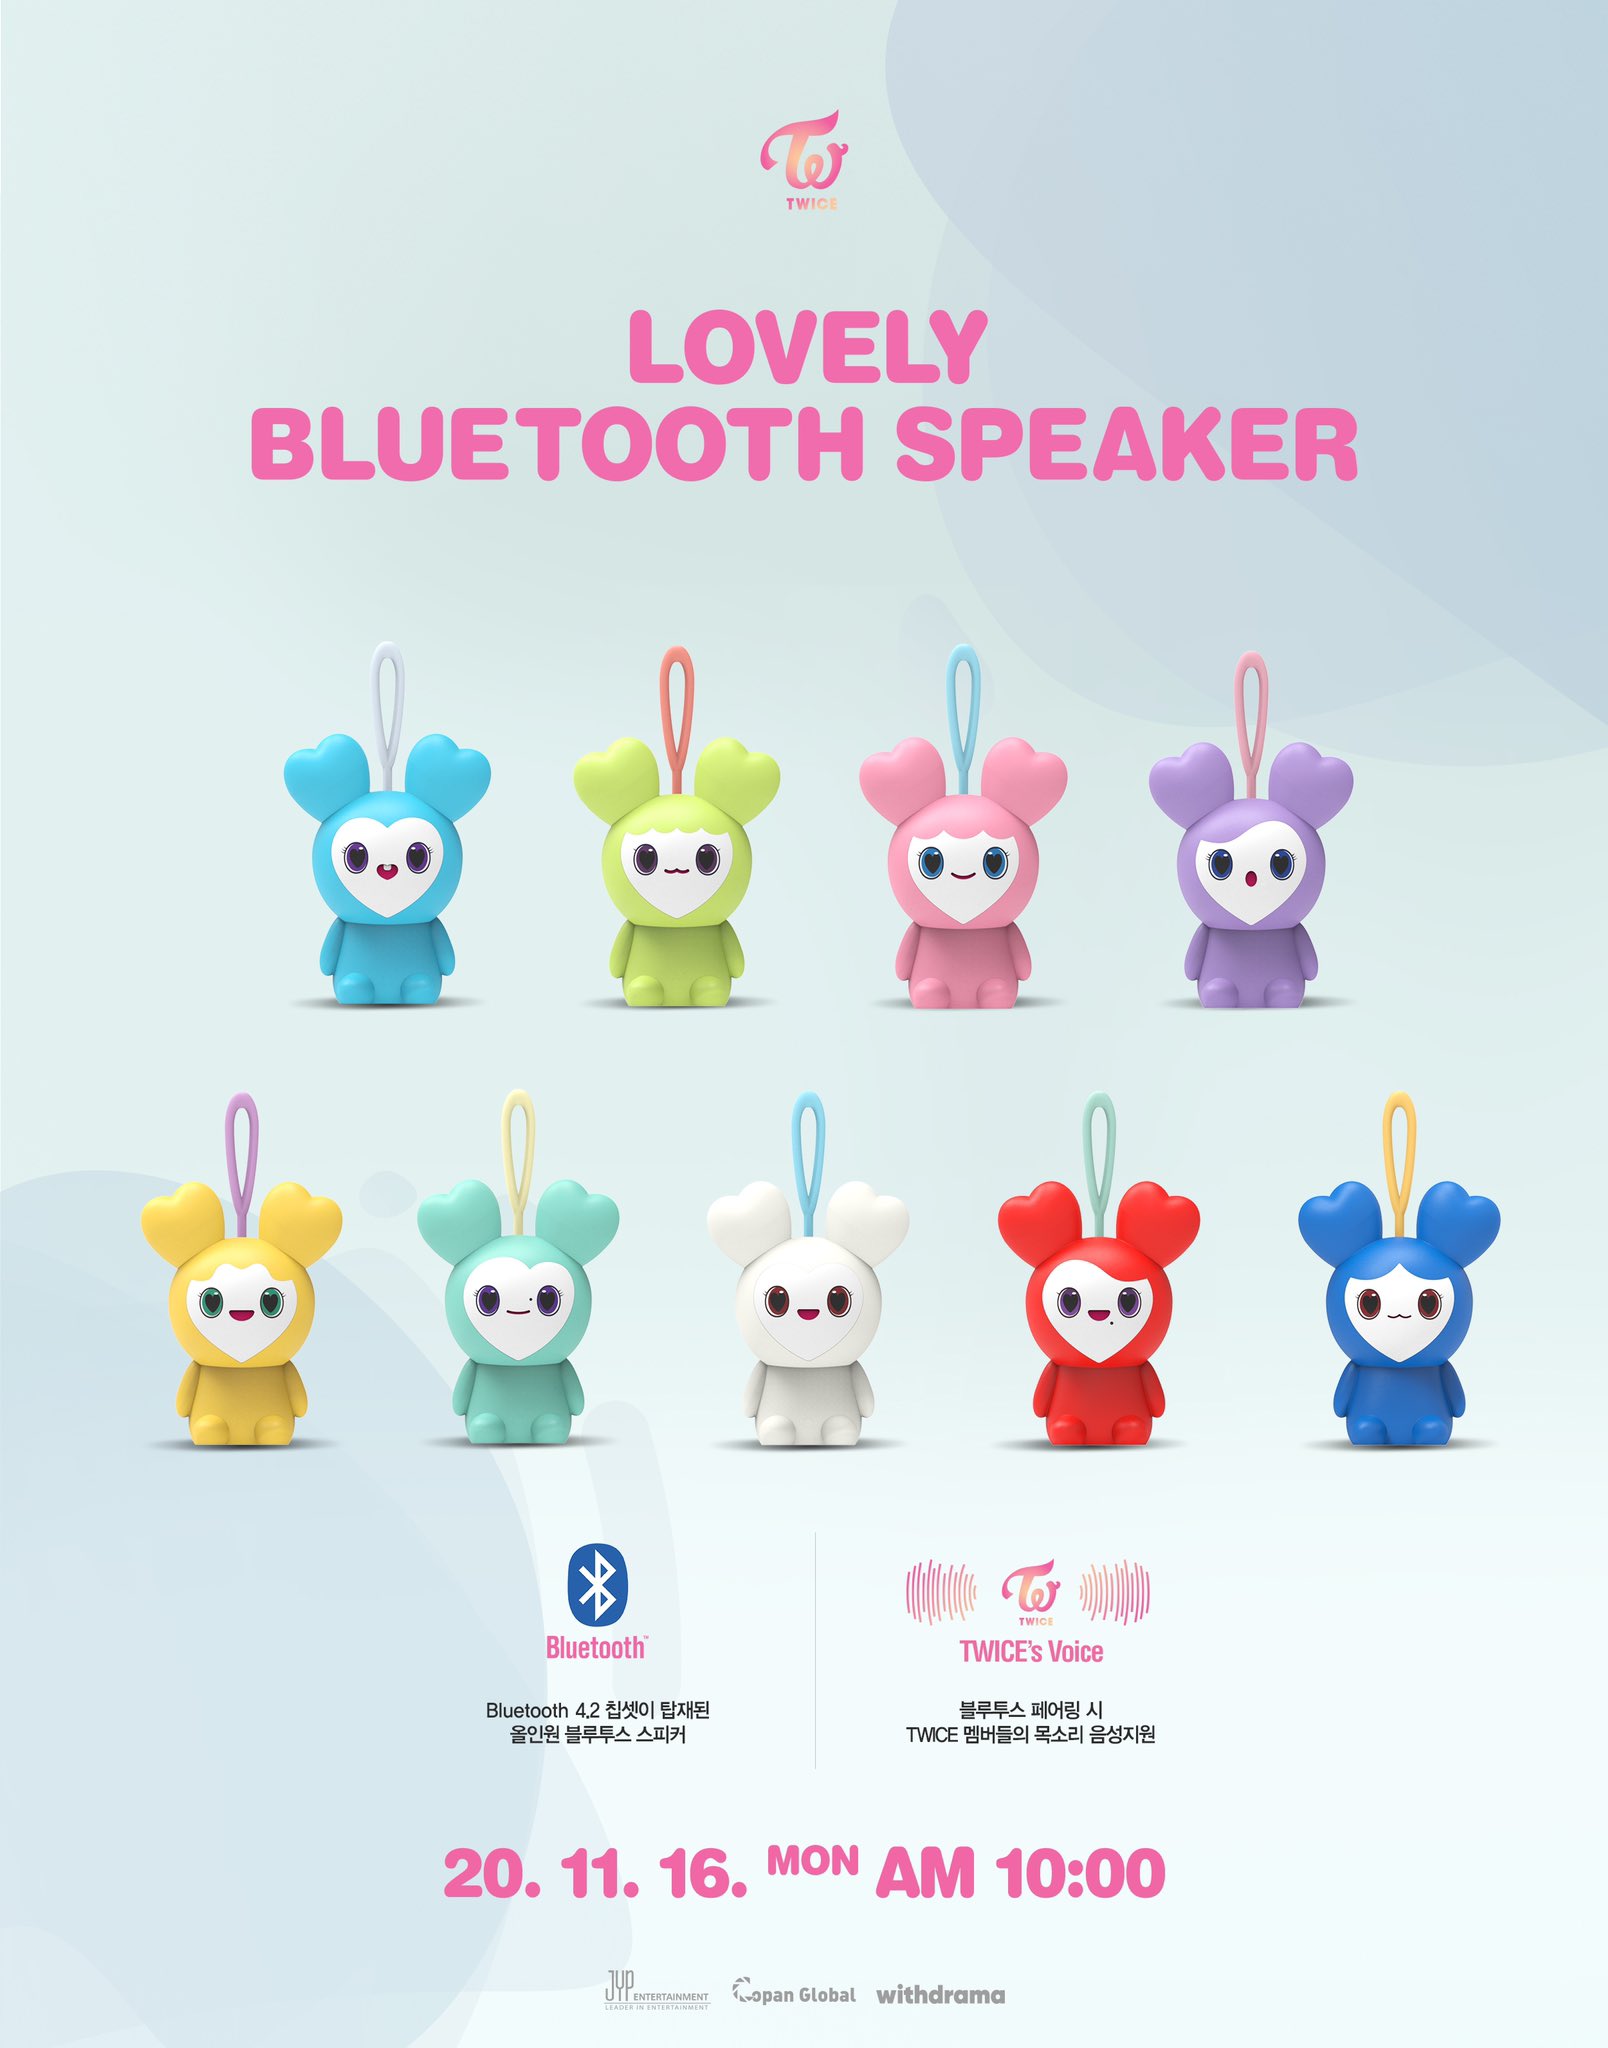 Twice Twice Lovely Bluetooth Speaker With Twice S Voice Pre Order Starts 11 16 Mon Twice 트와이스 Lovelyspeaker T Co Ps92kaanqa Twitter